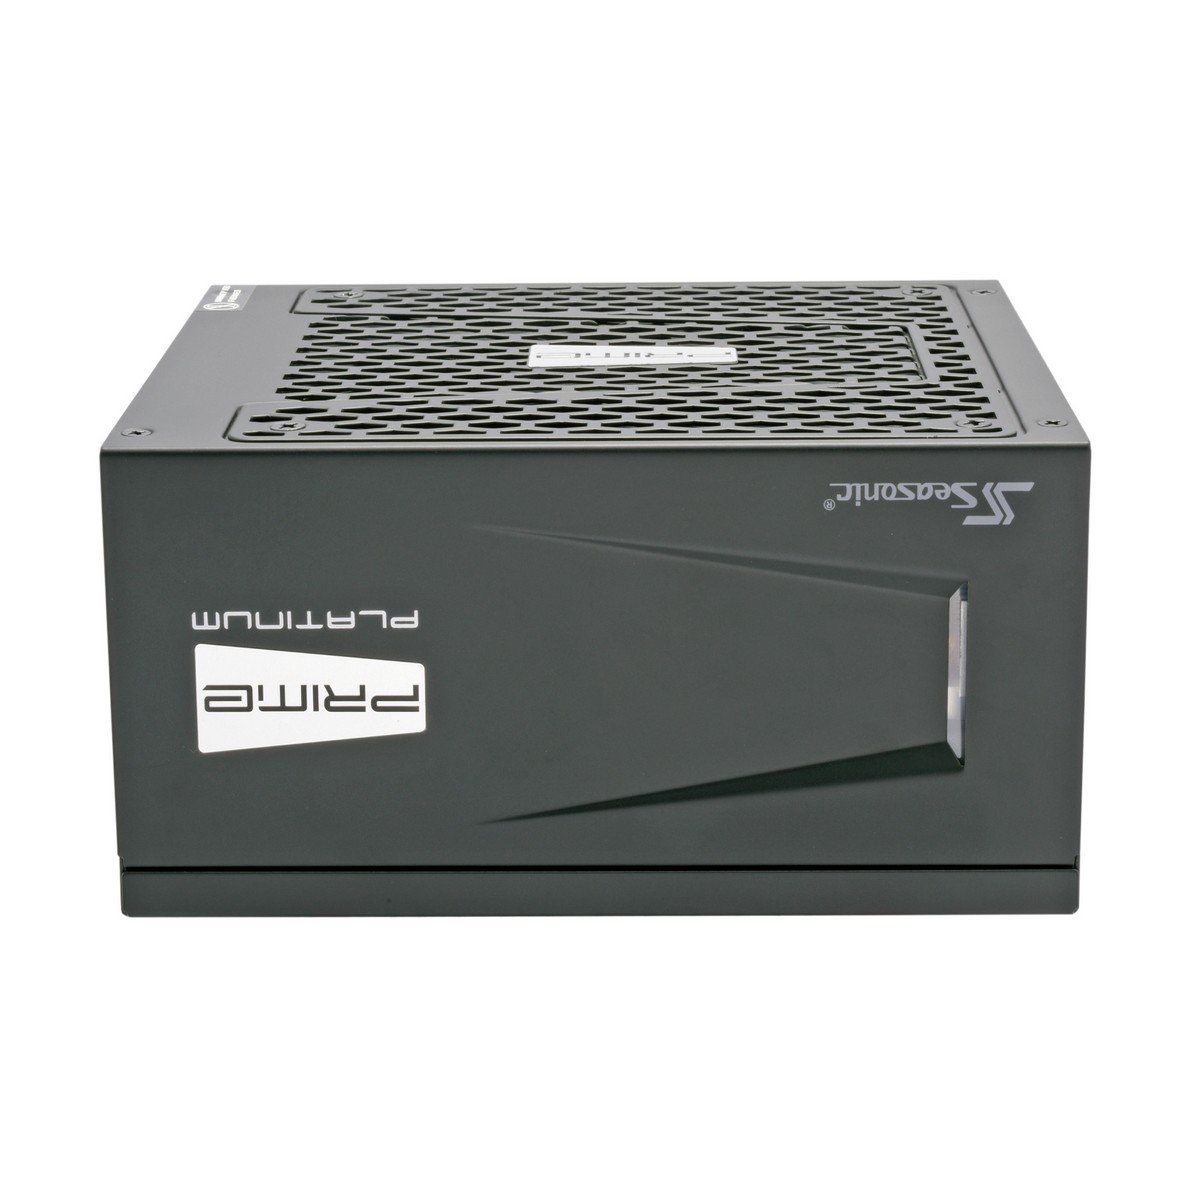 Seasonic - Seasonic Prime Ultra Platinum 1000W 80 Plus Platinum Modular Power Supply